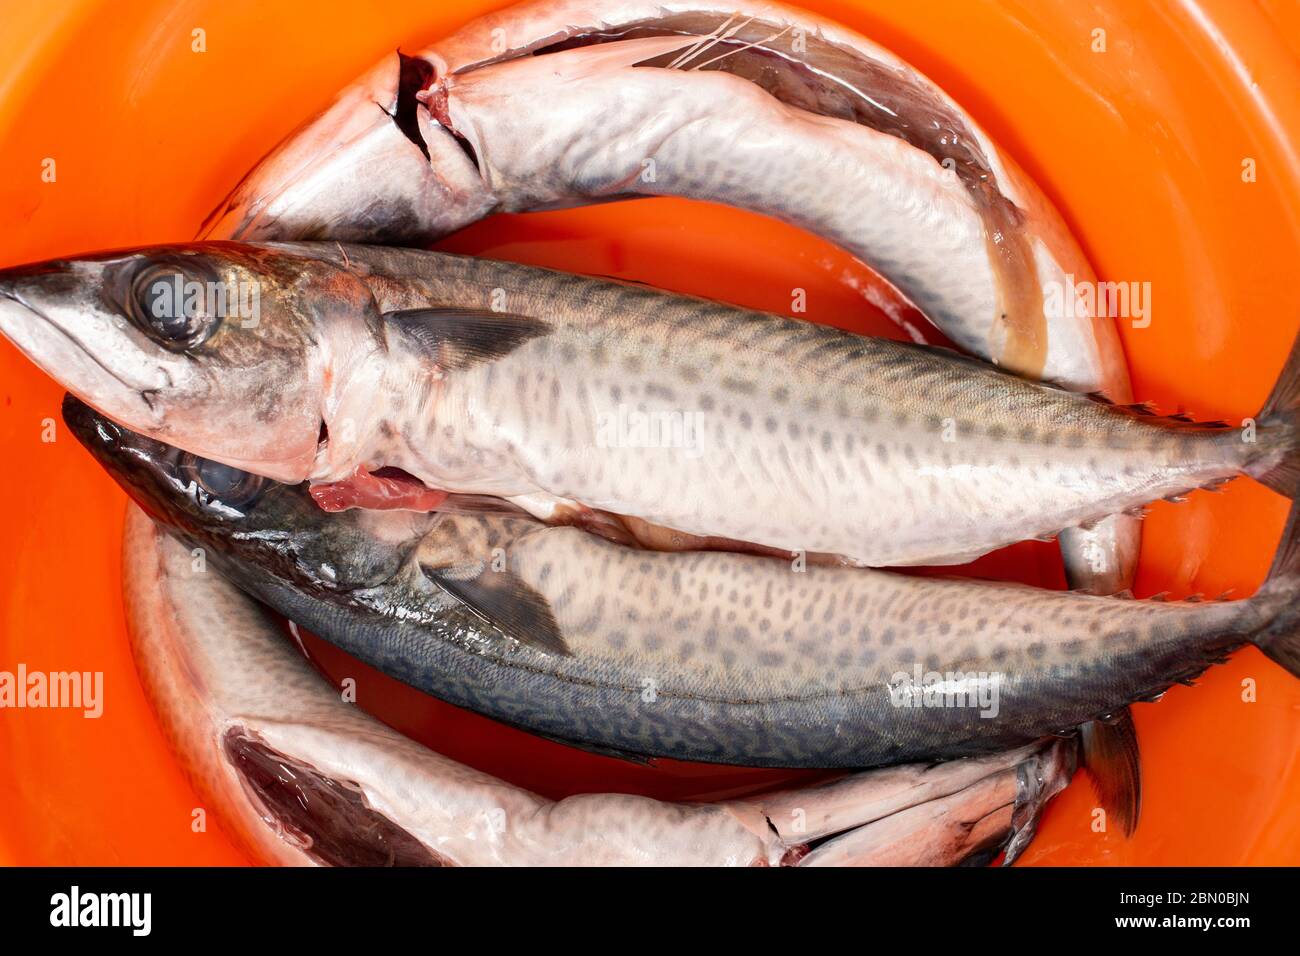 https://c8.alamy.com/comp/2BN0BJN/atlantic-chub-mackerel-arranged-ready-for-cooking-2BN0BJN.jpg